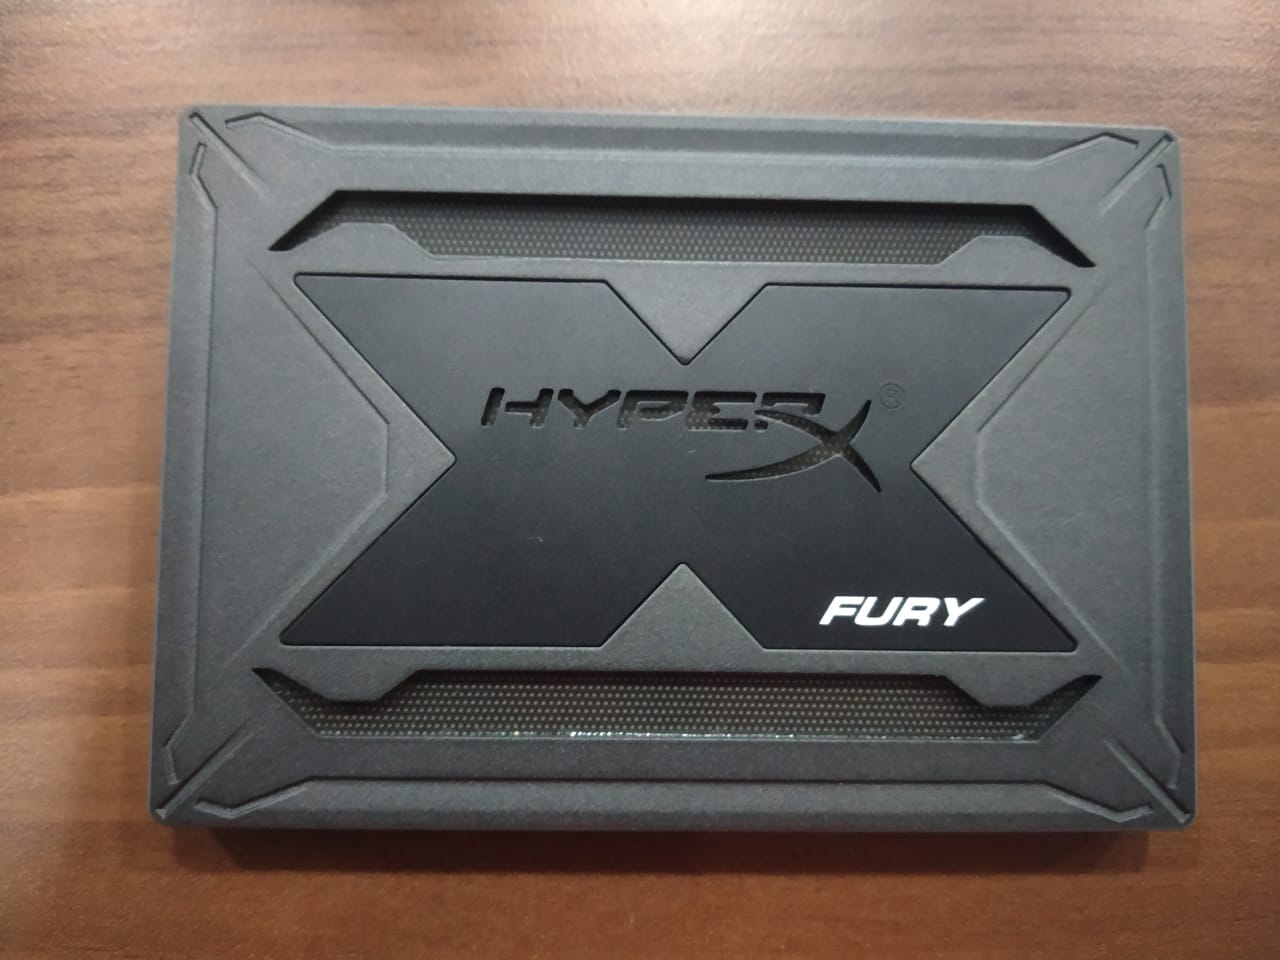 HyperX FURY RGB SSD